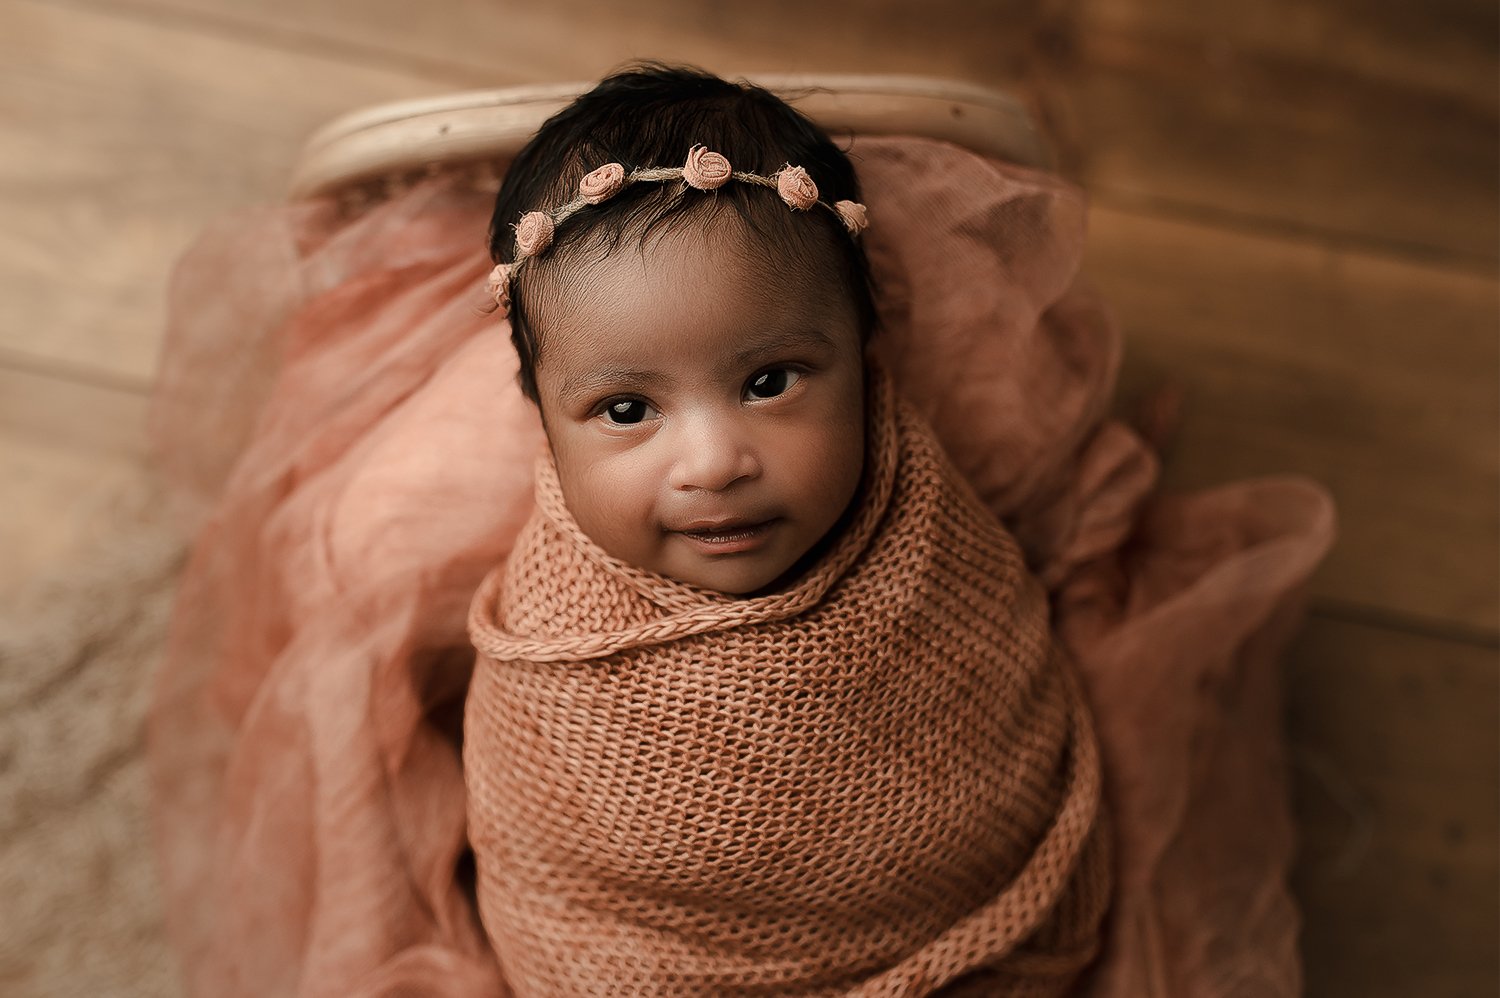 Jessica Fenfert Baltimore Maryland Newborn Photographer baby in bed pose